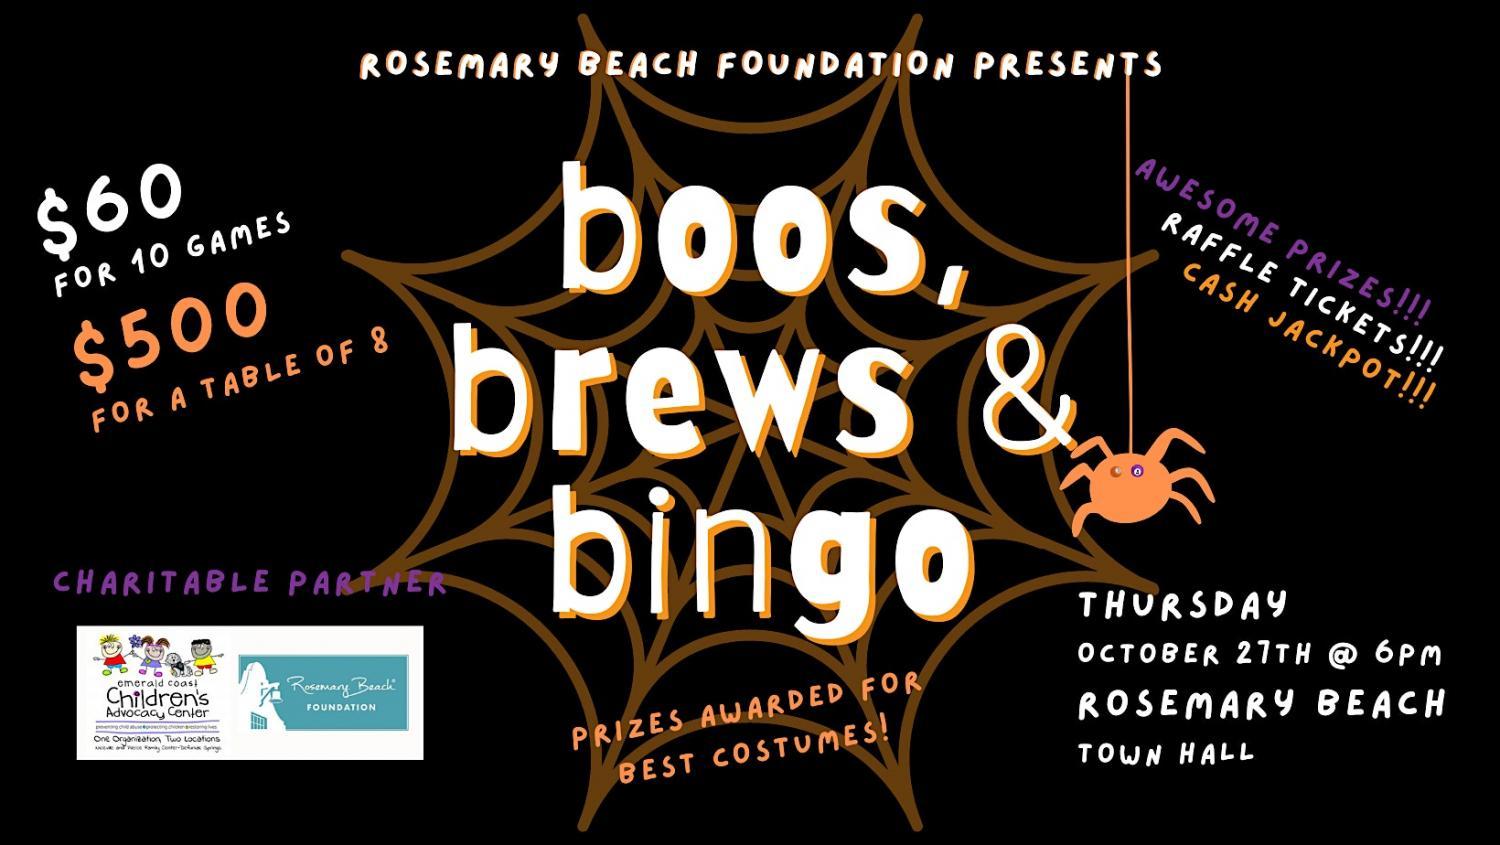 Bingo Night -- Boos Brews & Bingo
Thu Oct 27, 7:00 PM - Thu Oct 27, 7:00 PM
in 8 days